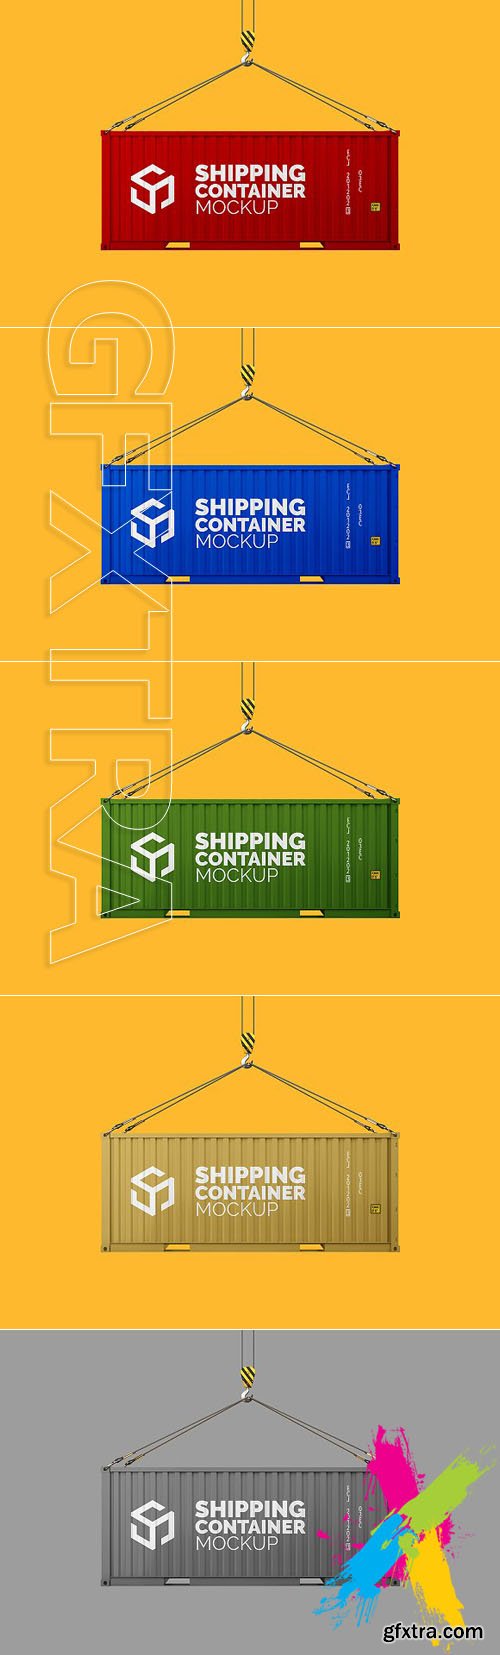 CreativeMarket - Shipping Container Mockup 1828174